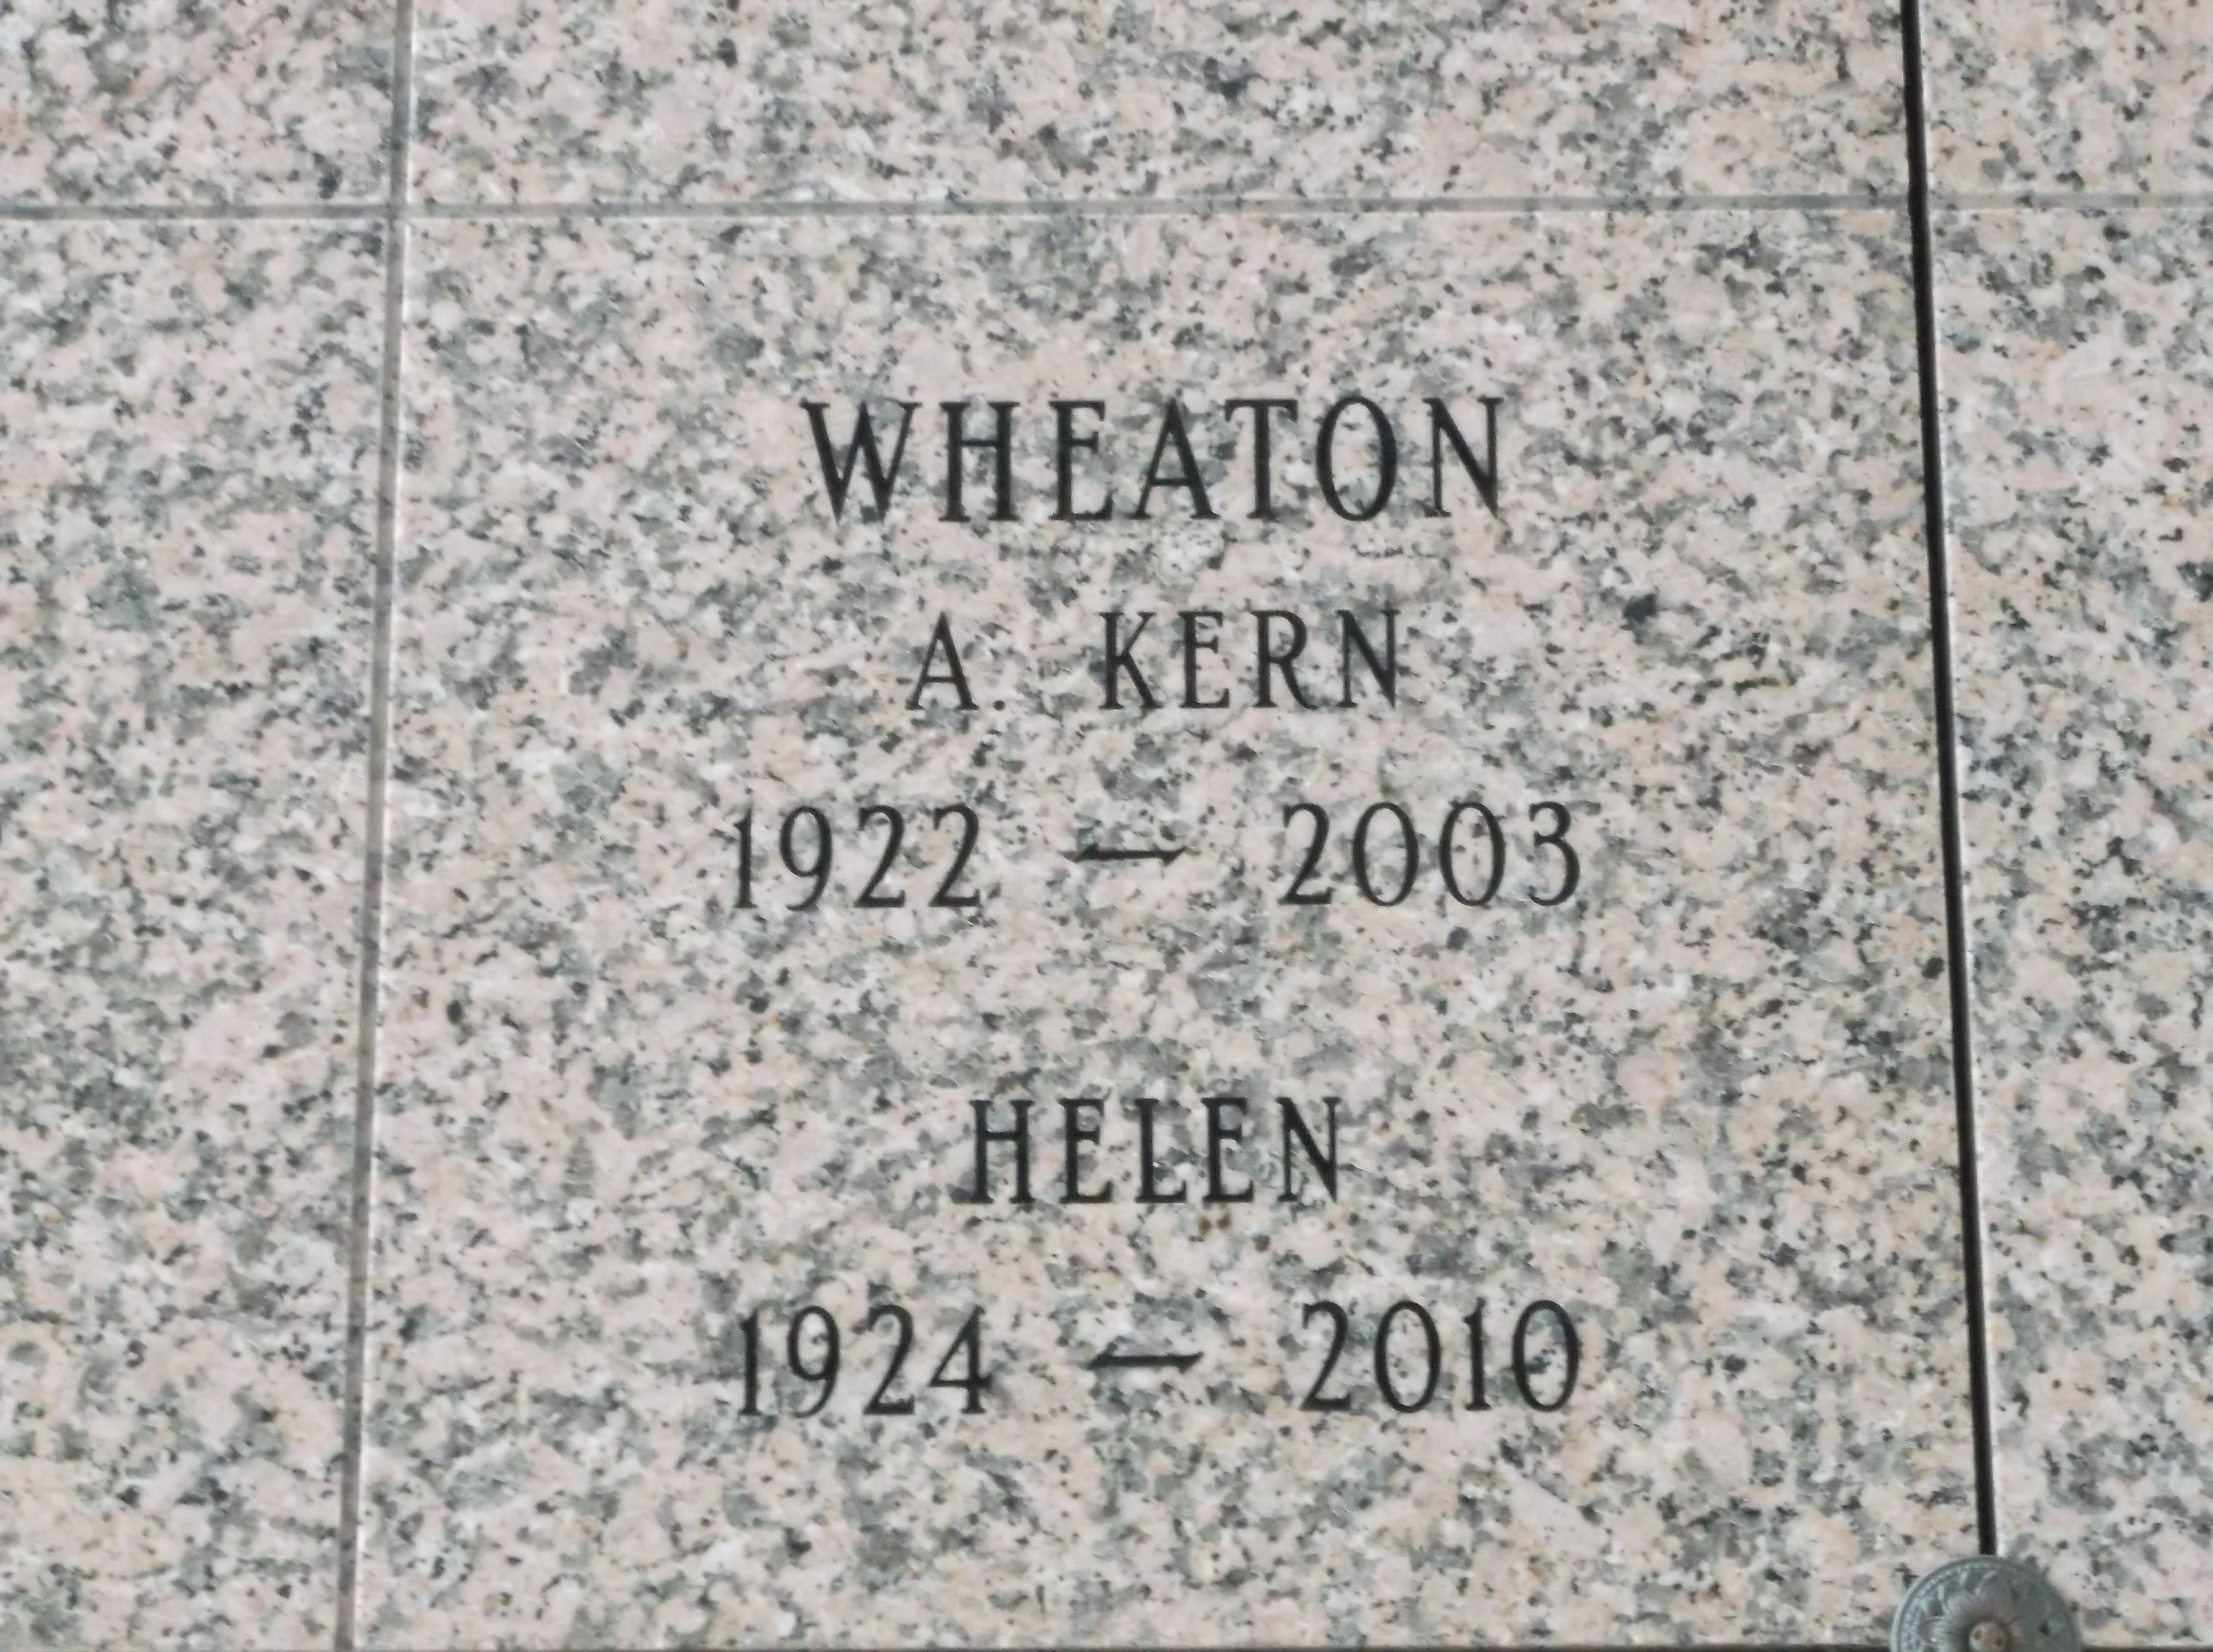 Helen Wheaton